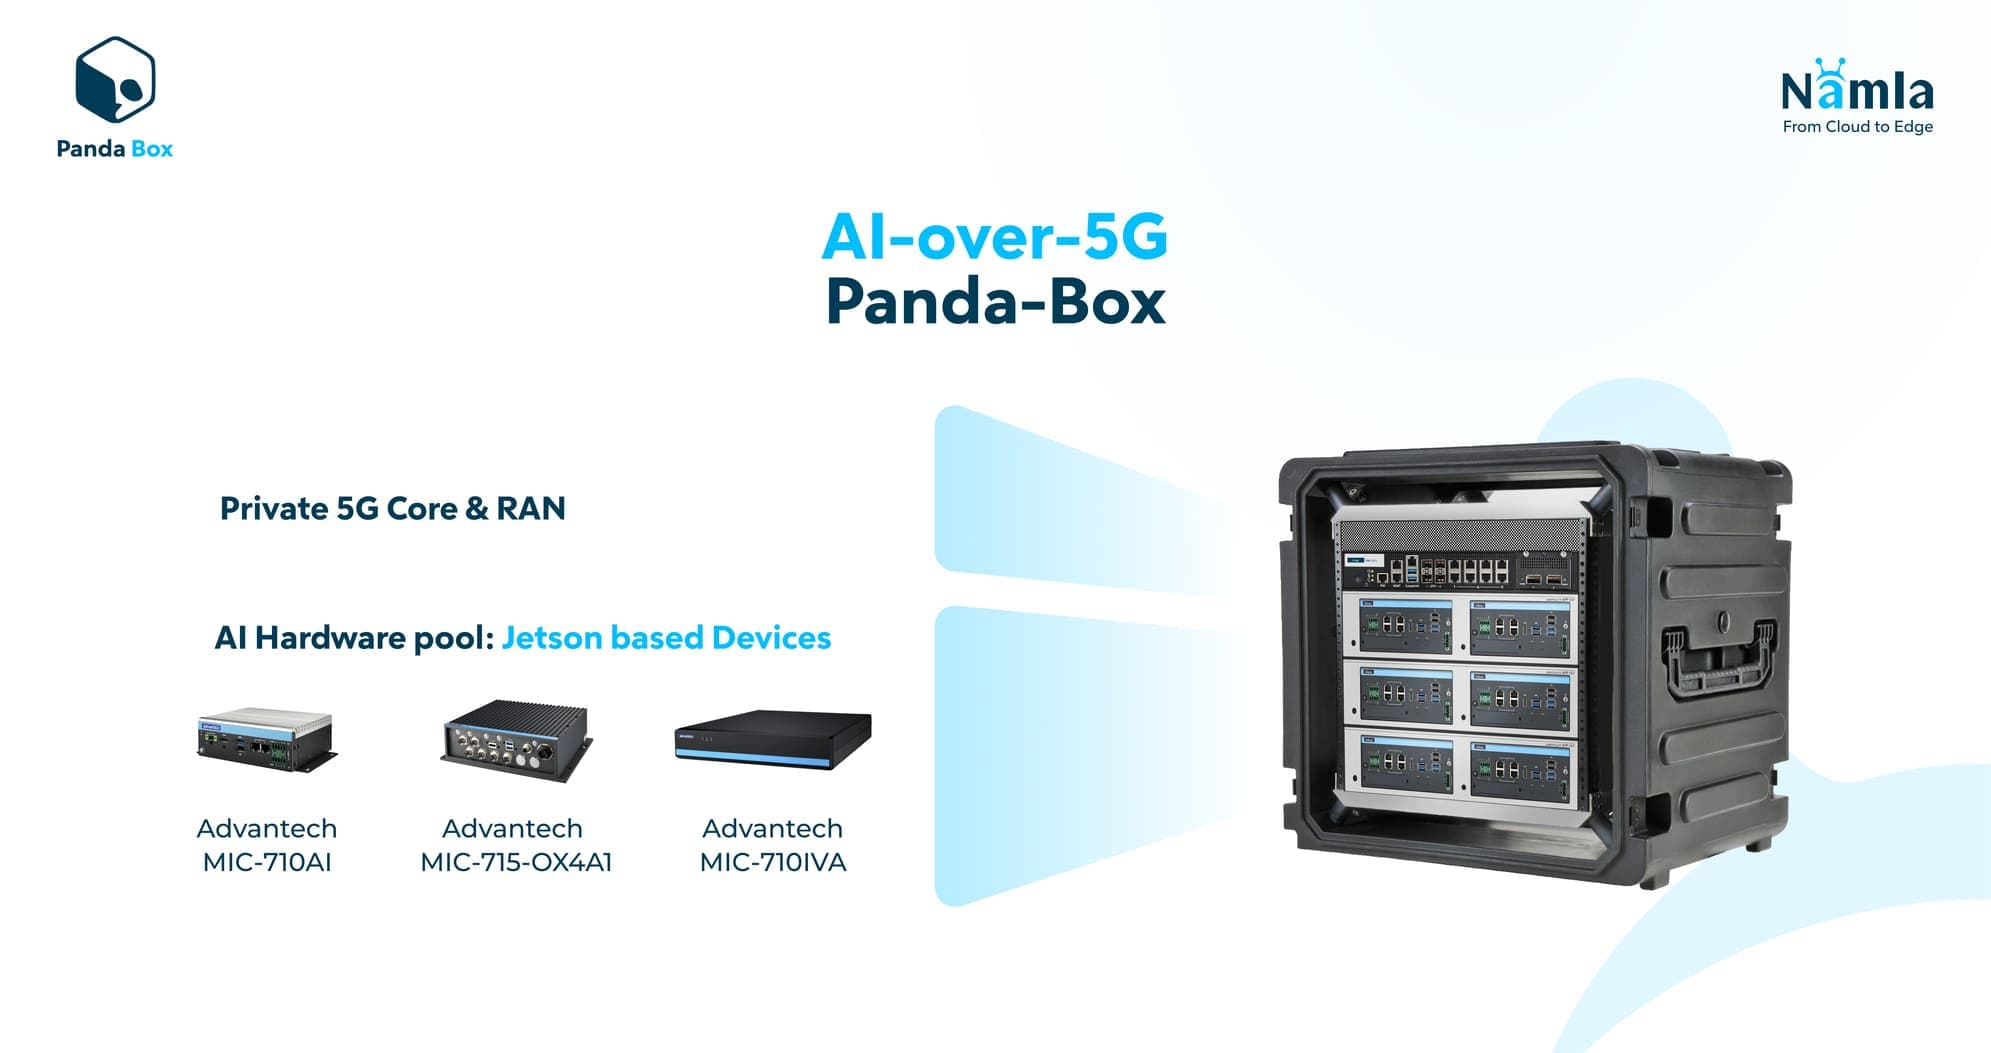 Namla Introduces Revolutionary "Panda Box": World's First AI over 5G Solution